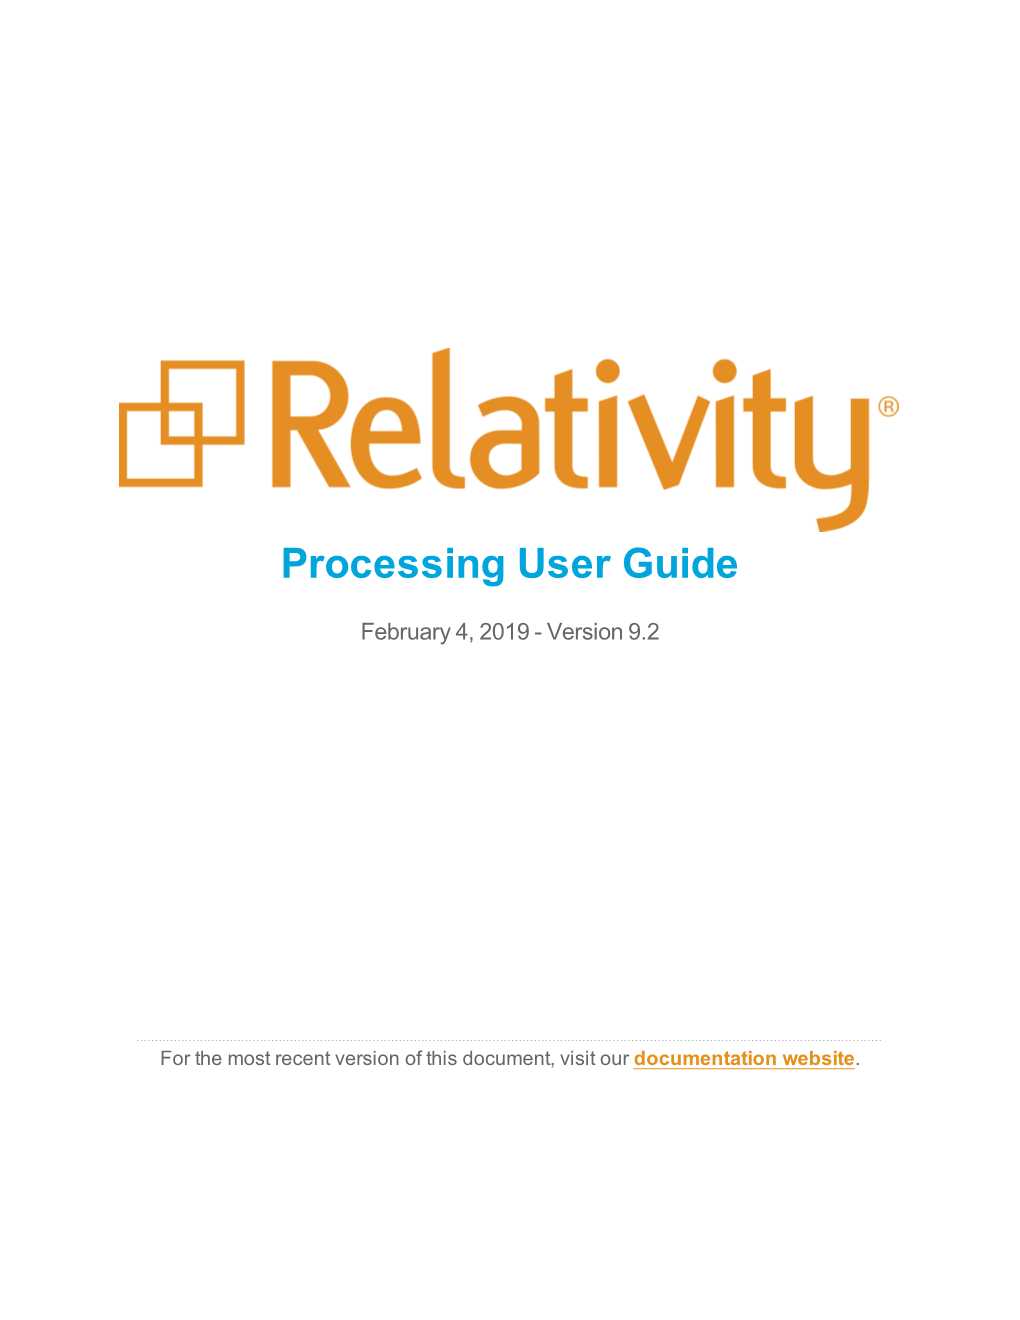 Relativity Processing User Guide V9.2